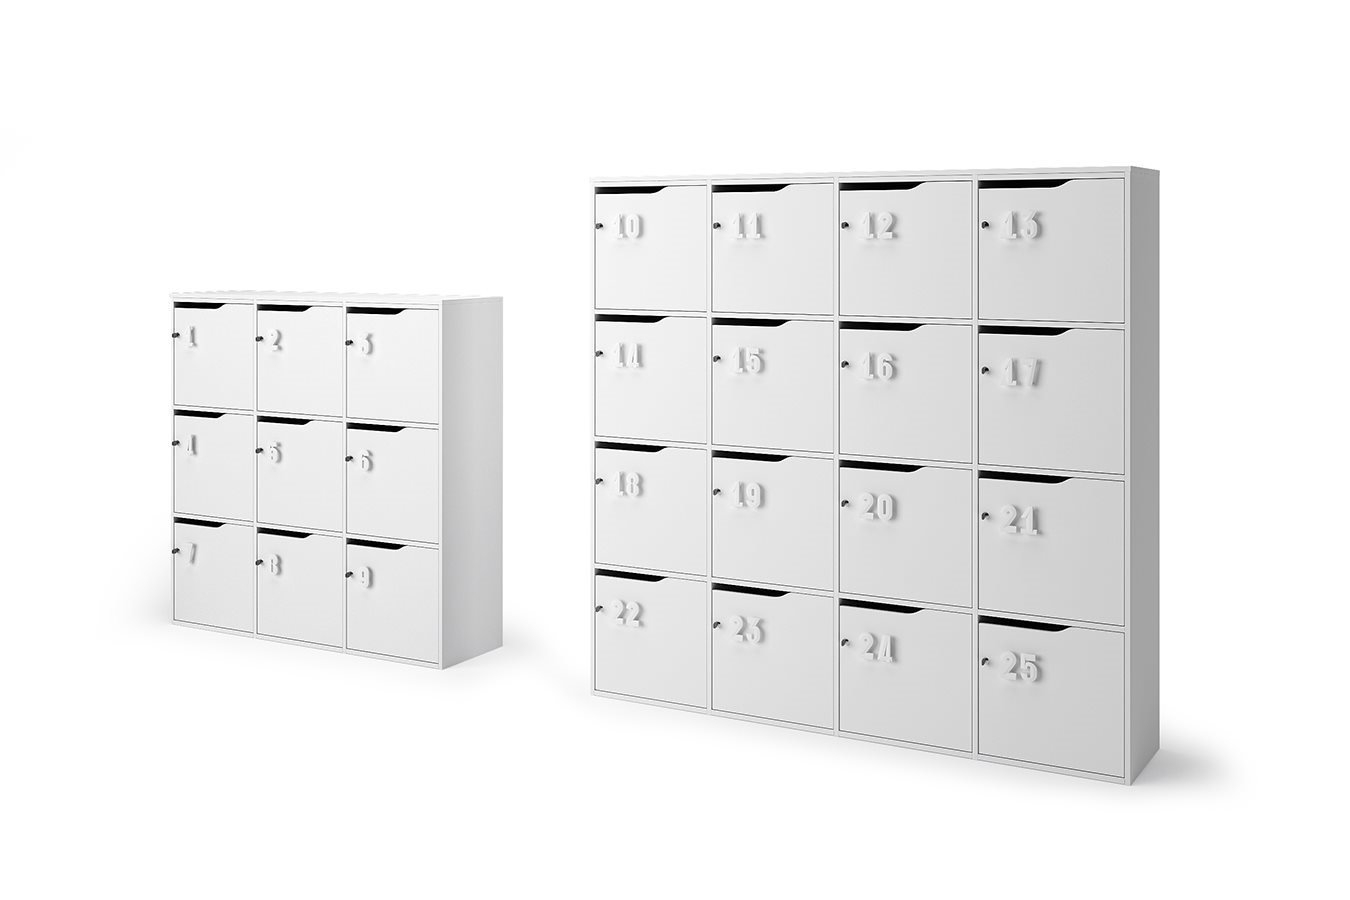 DVO_storage_lockers2.jpg